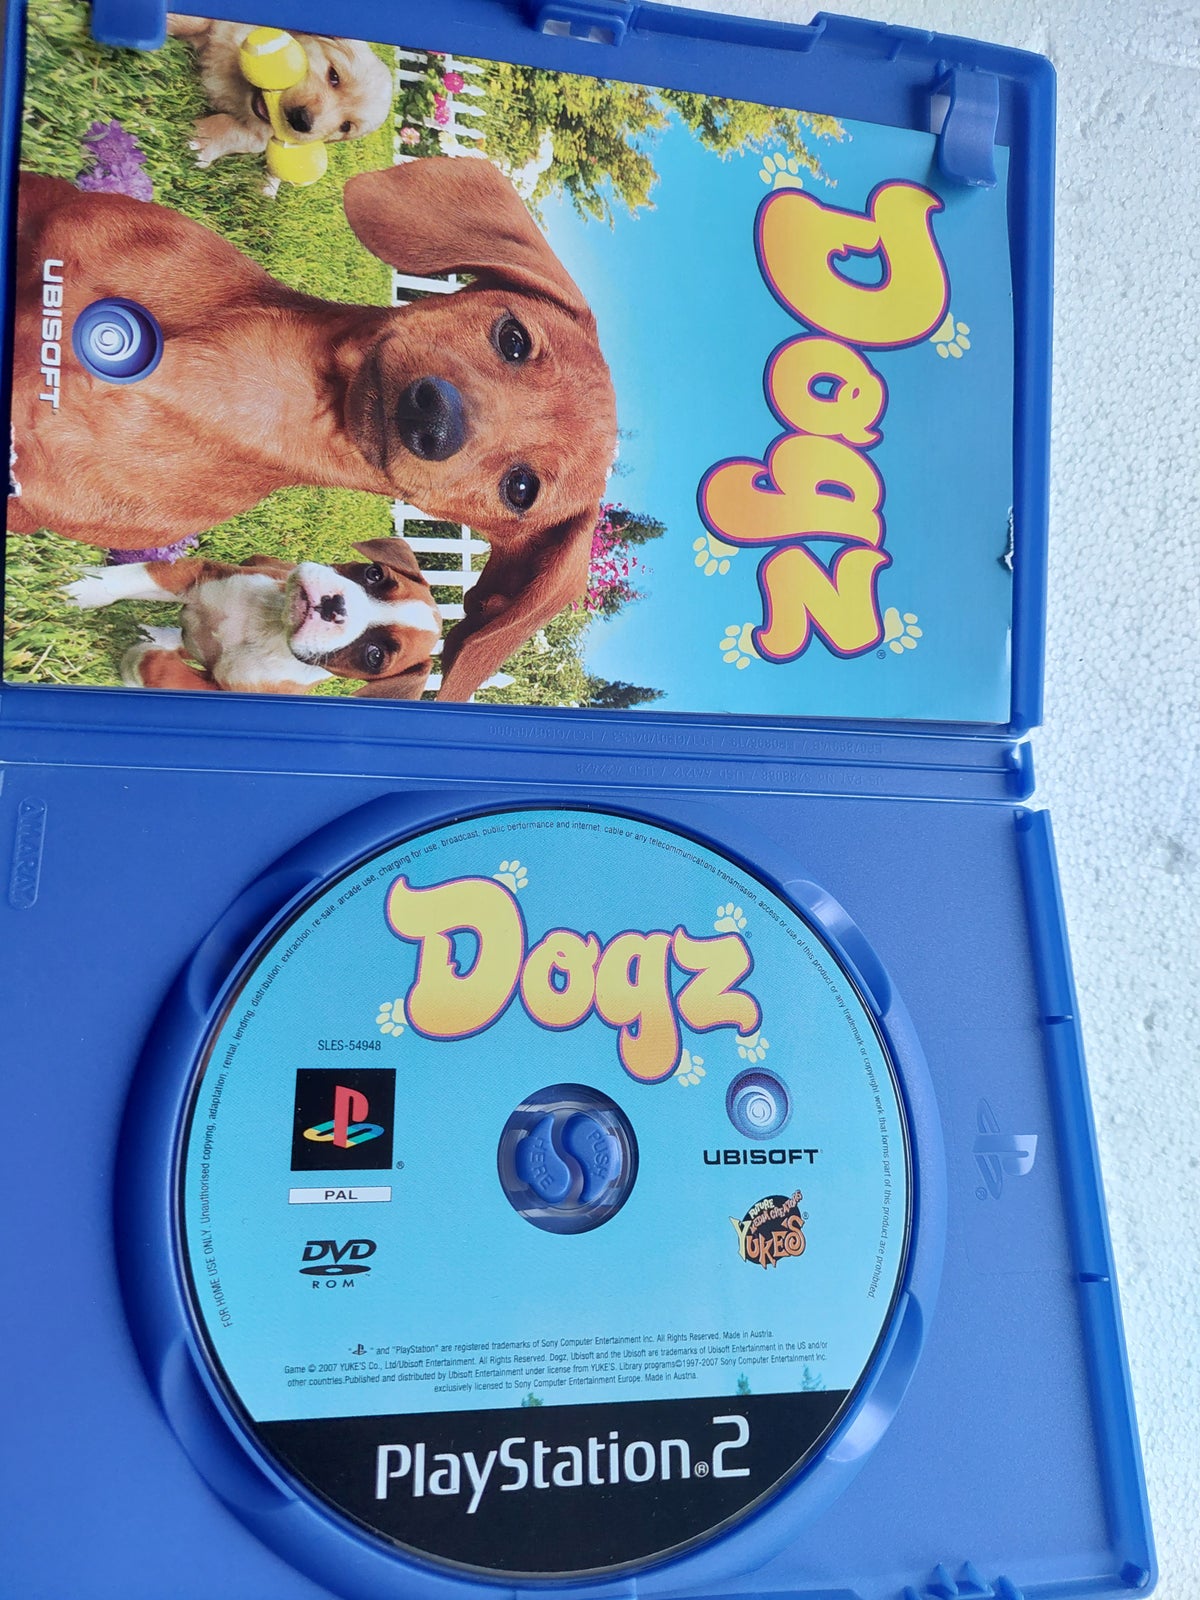 Dogz, PS2, anden genre